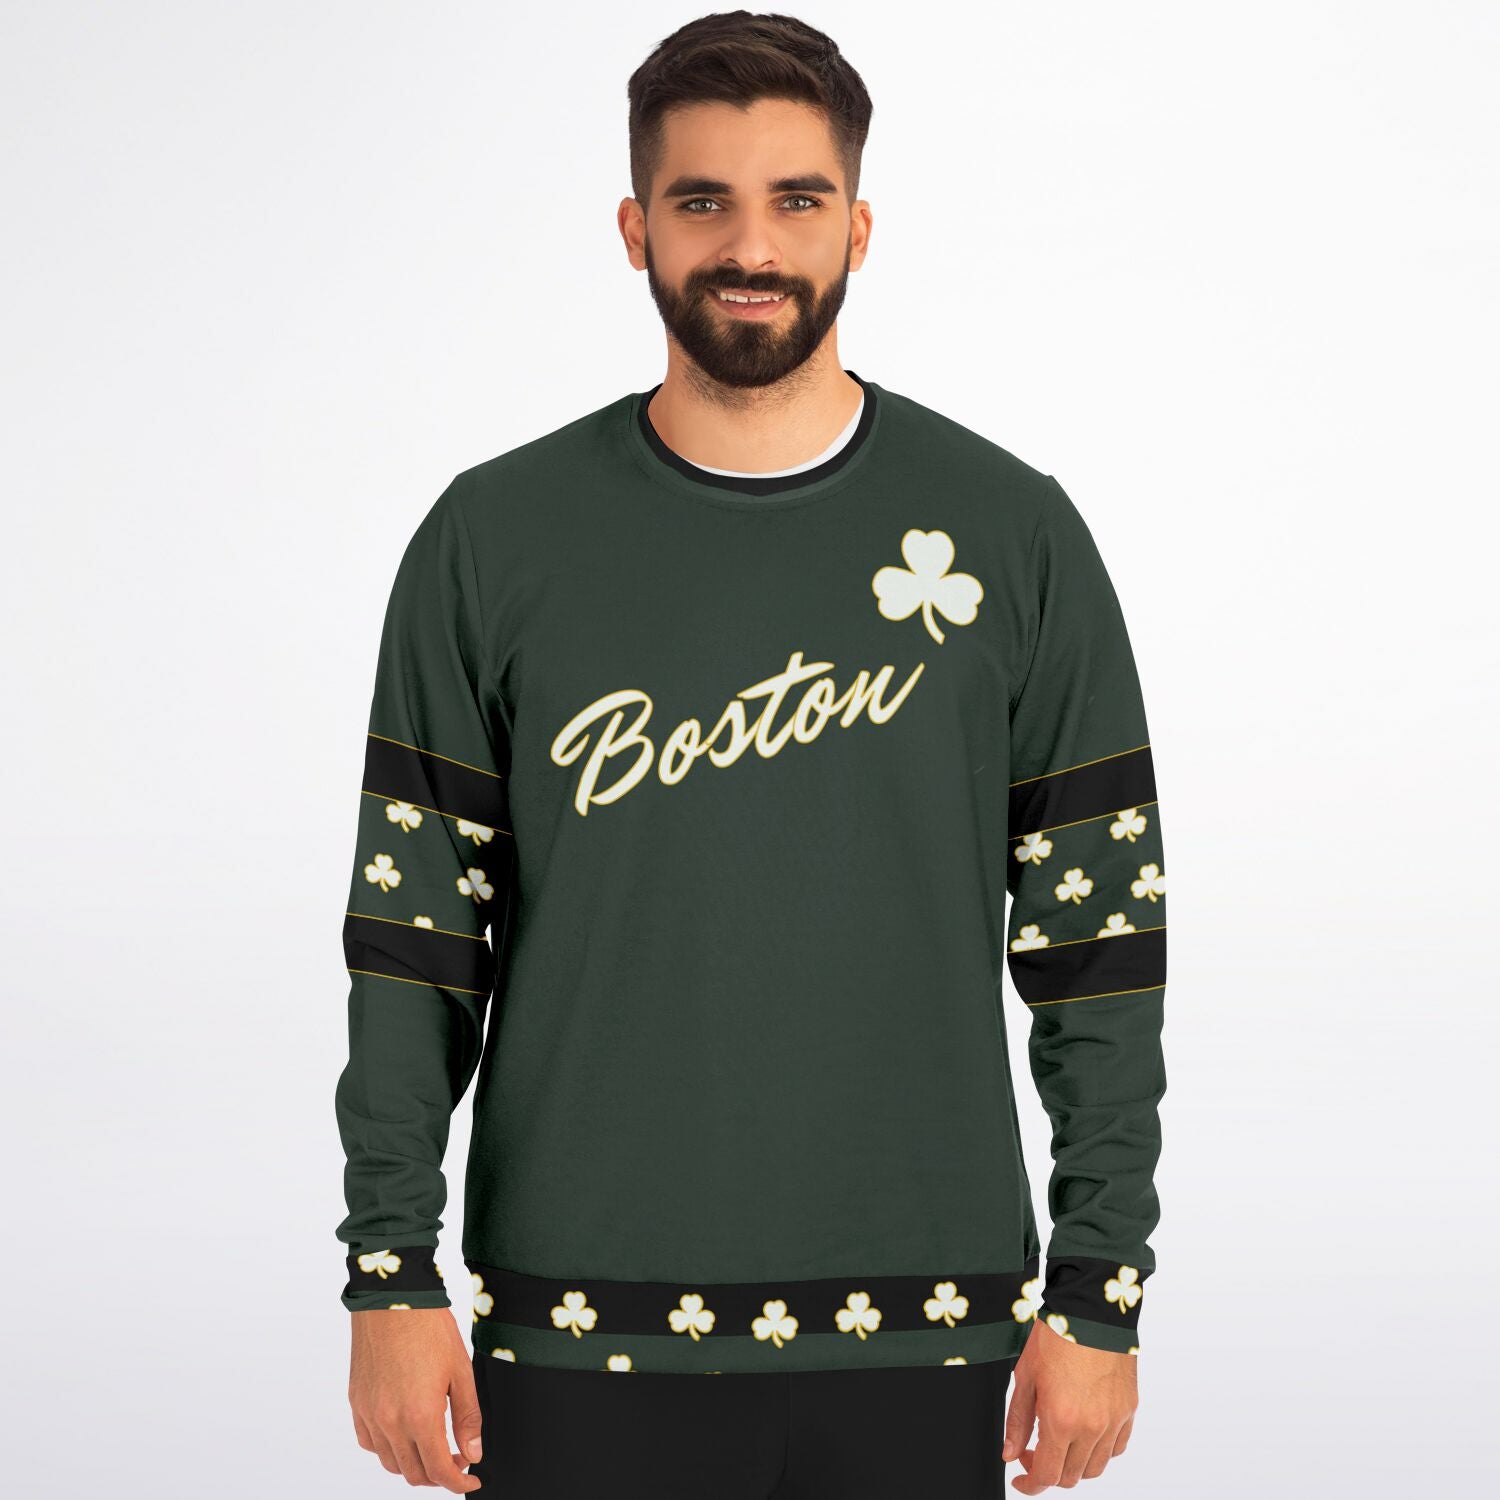 Boston Celtics Inspired Classic Colour Sweatshirt - HipHatter